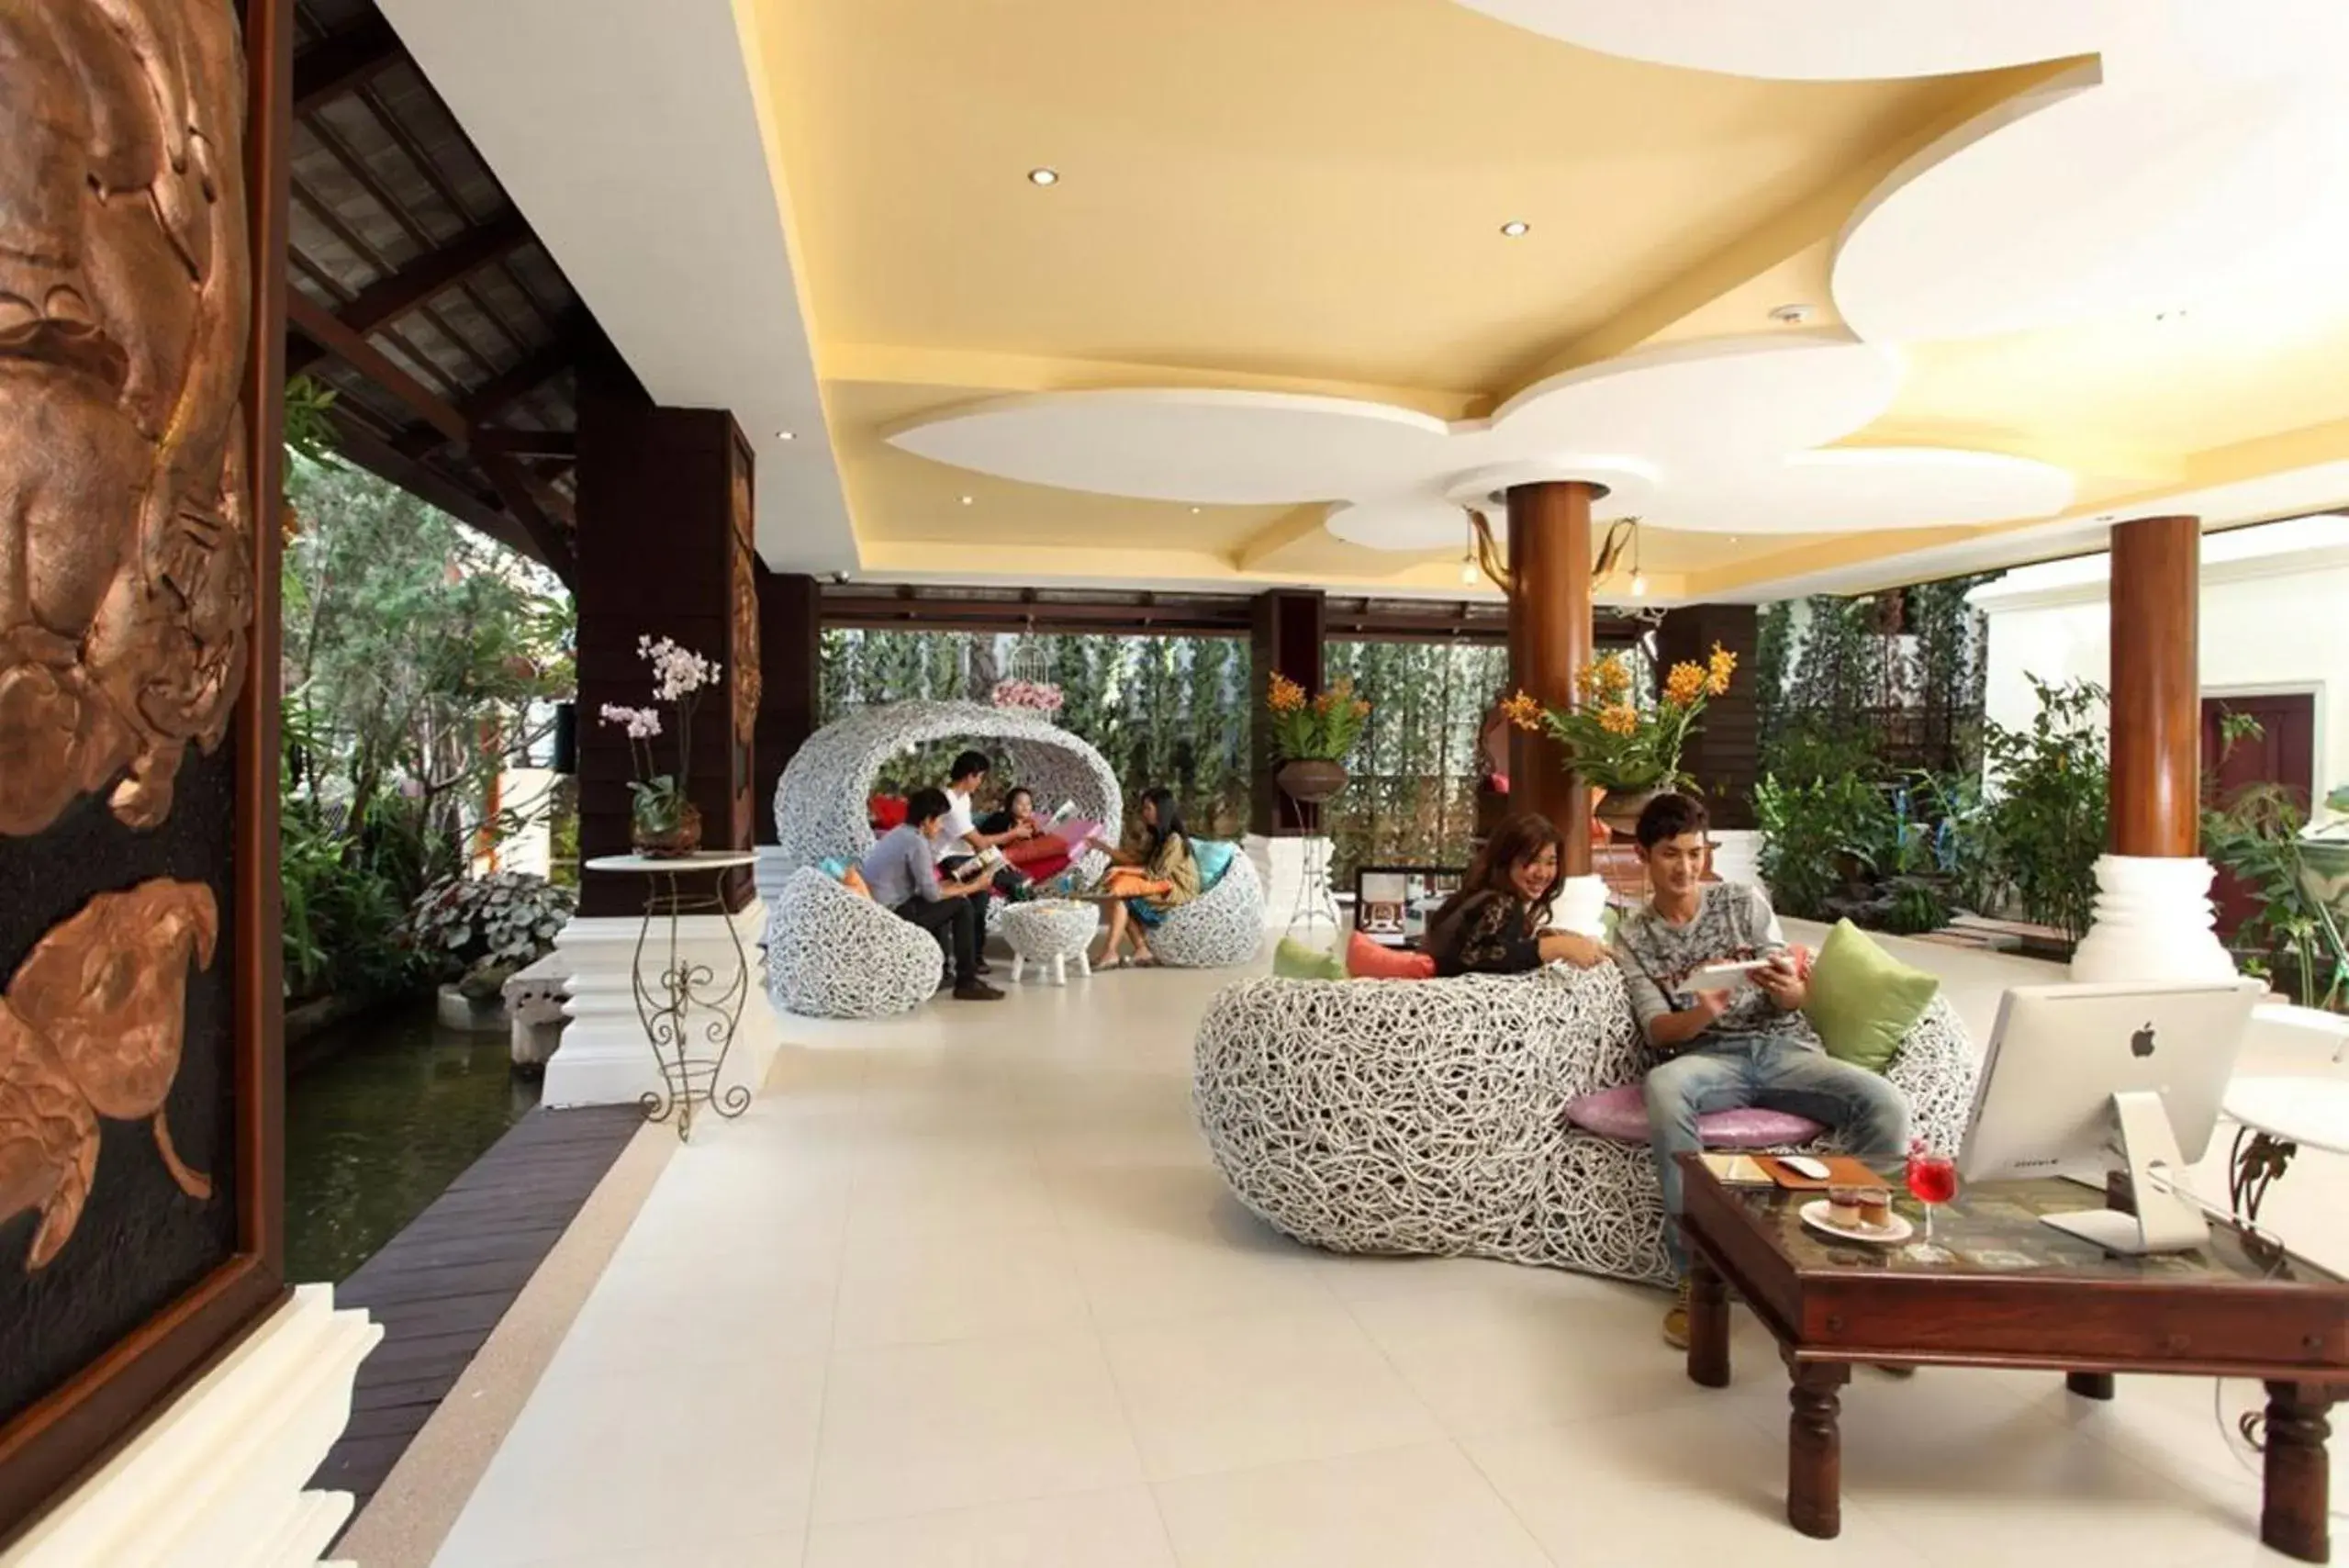 Lobby or reception in Kodchasri Thani Hotel